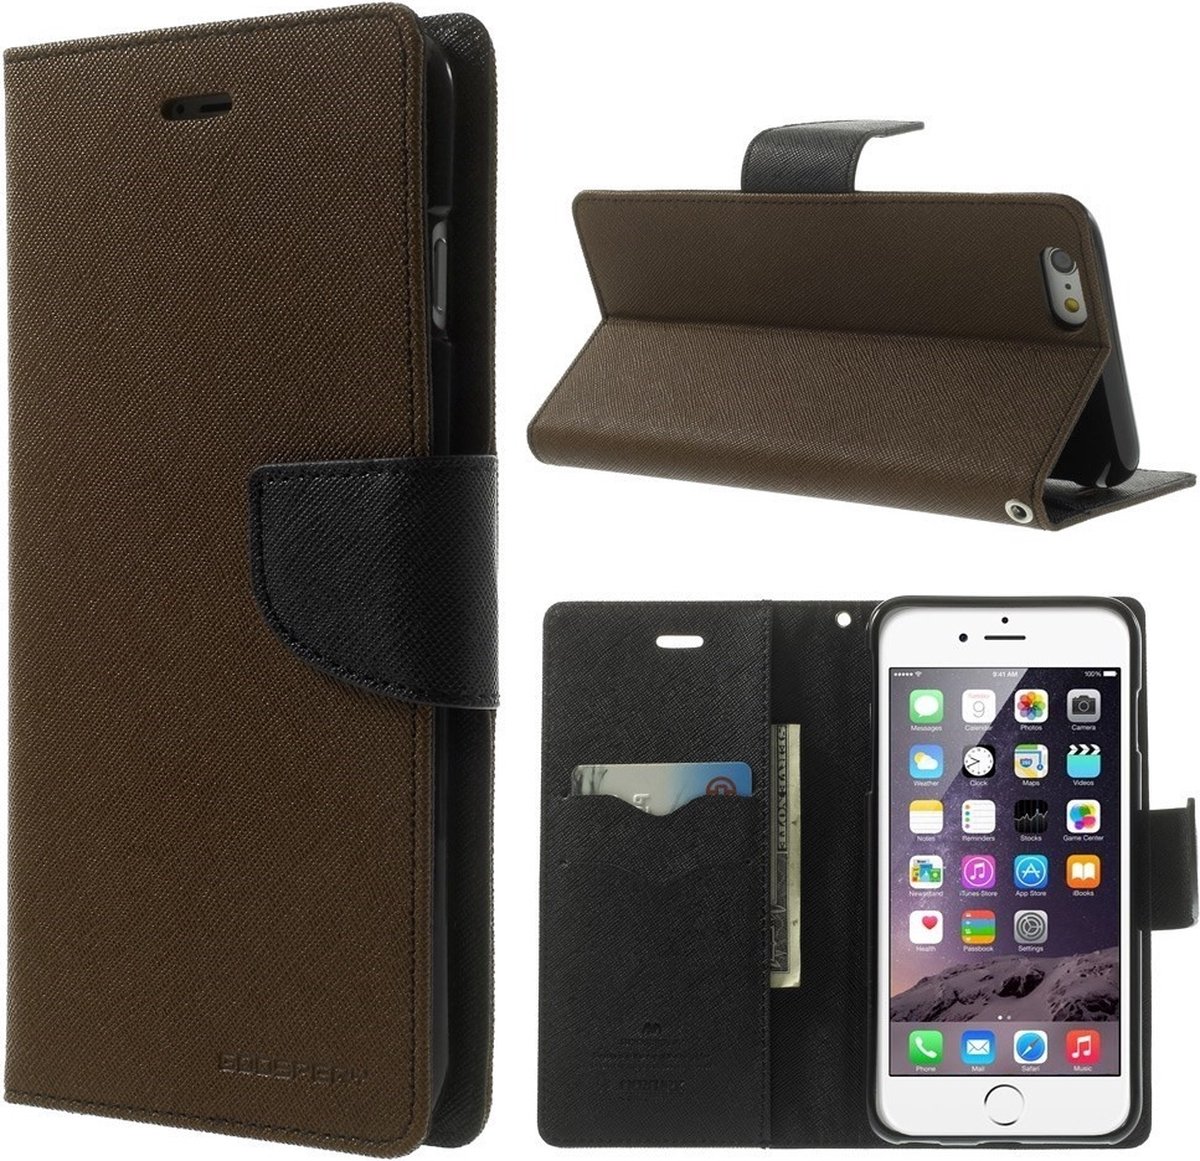 Mercury Goospery Bookcase hoesje iPhone 6 Plus 6s Plus Wallet case Bruin zwart portemonnee